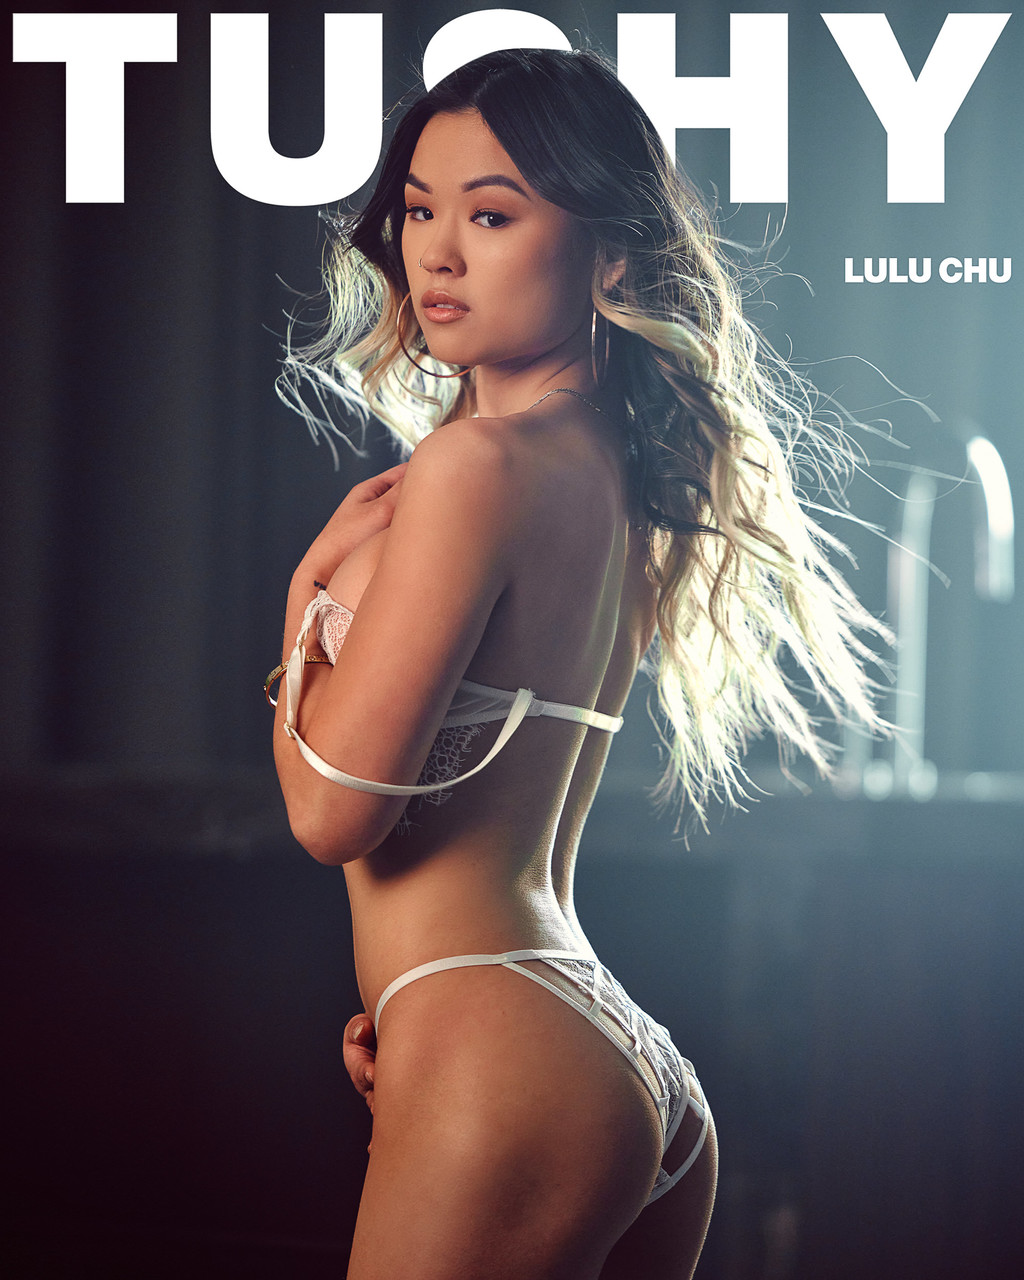 Petite Asian Lulu Chu gets anal fucked & gives an ass to mouth cock licking porn photo #425580936 | Tushy Pics, Lulu Chu, Mick Blue, Asian, mobile porn